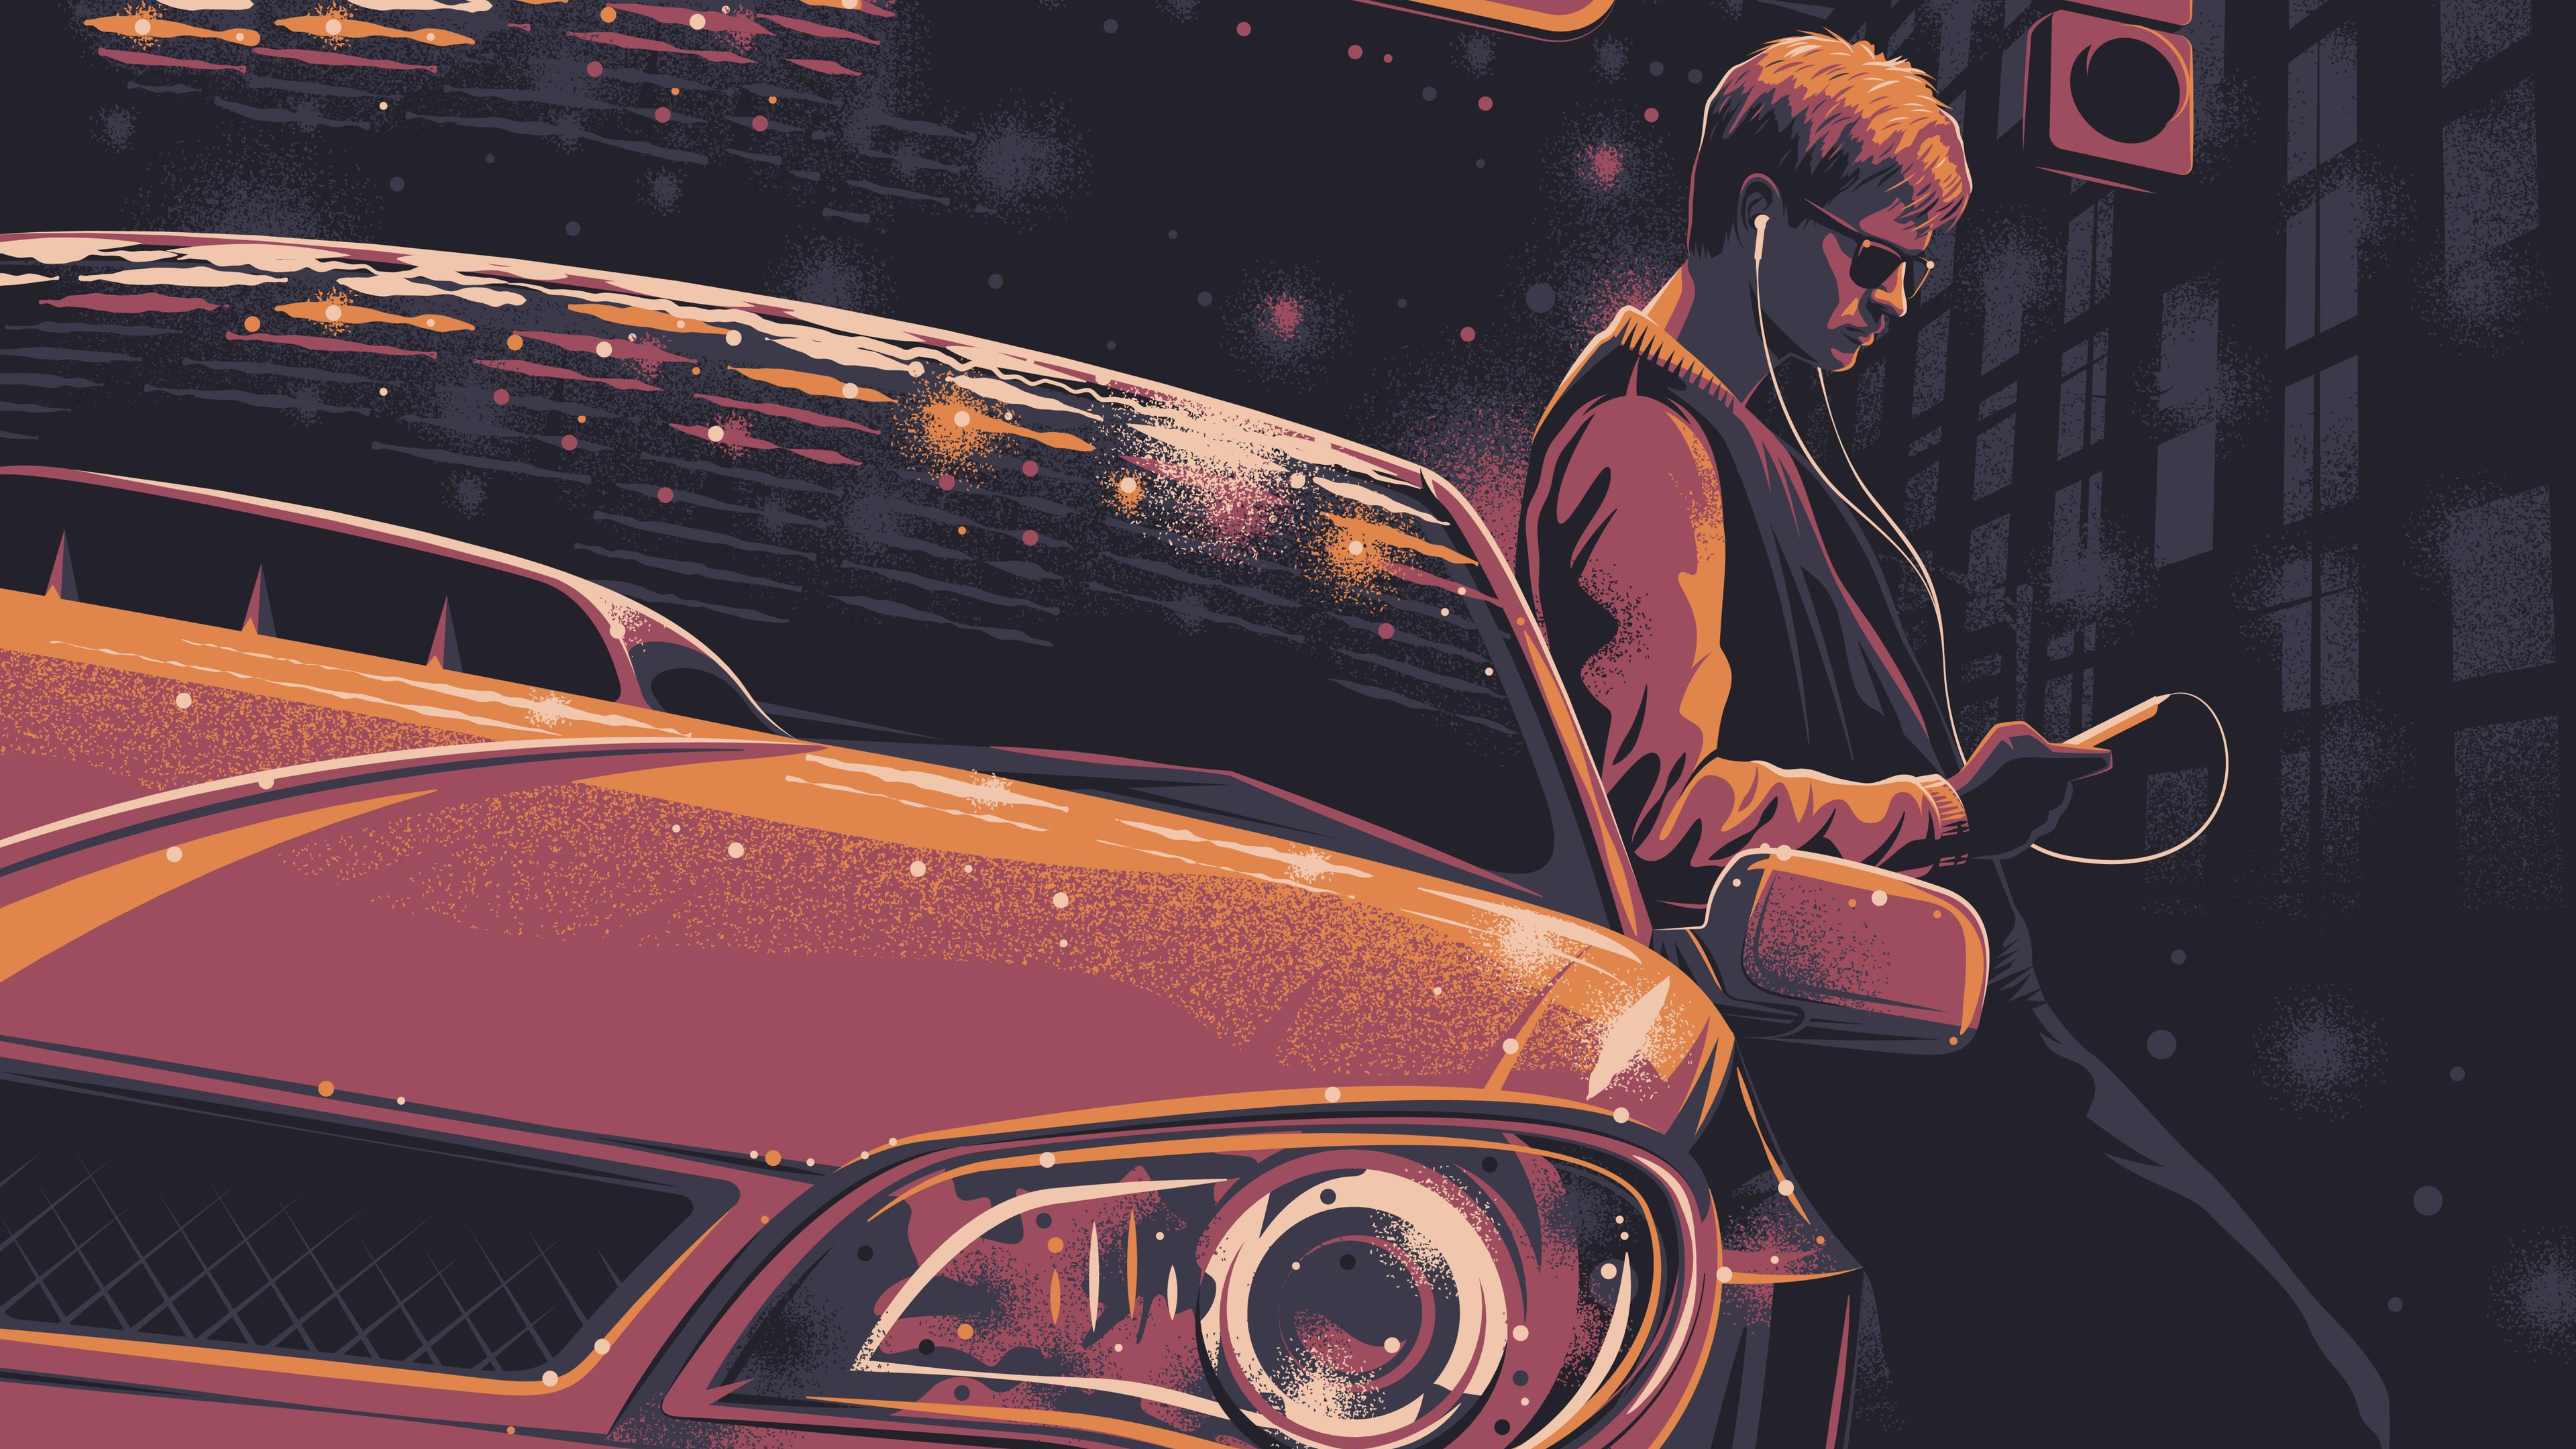 Wallpaper 4k Baby Driver 4k Art 2017 movies wallpapers 4k